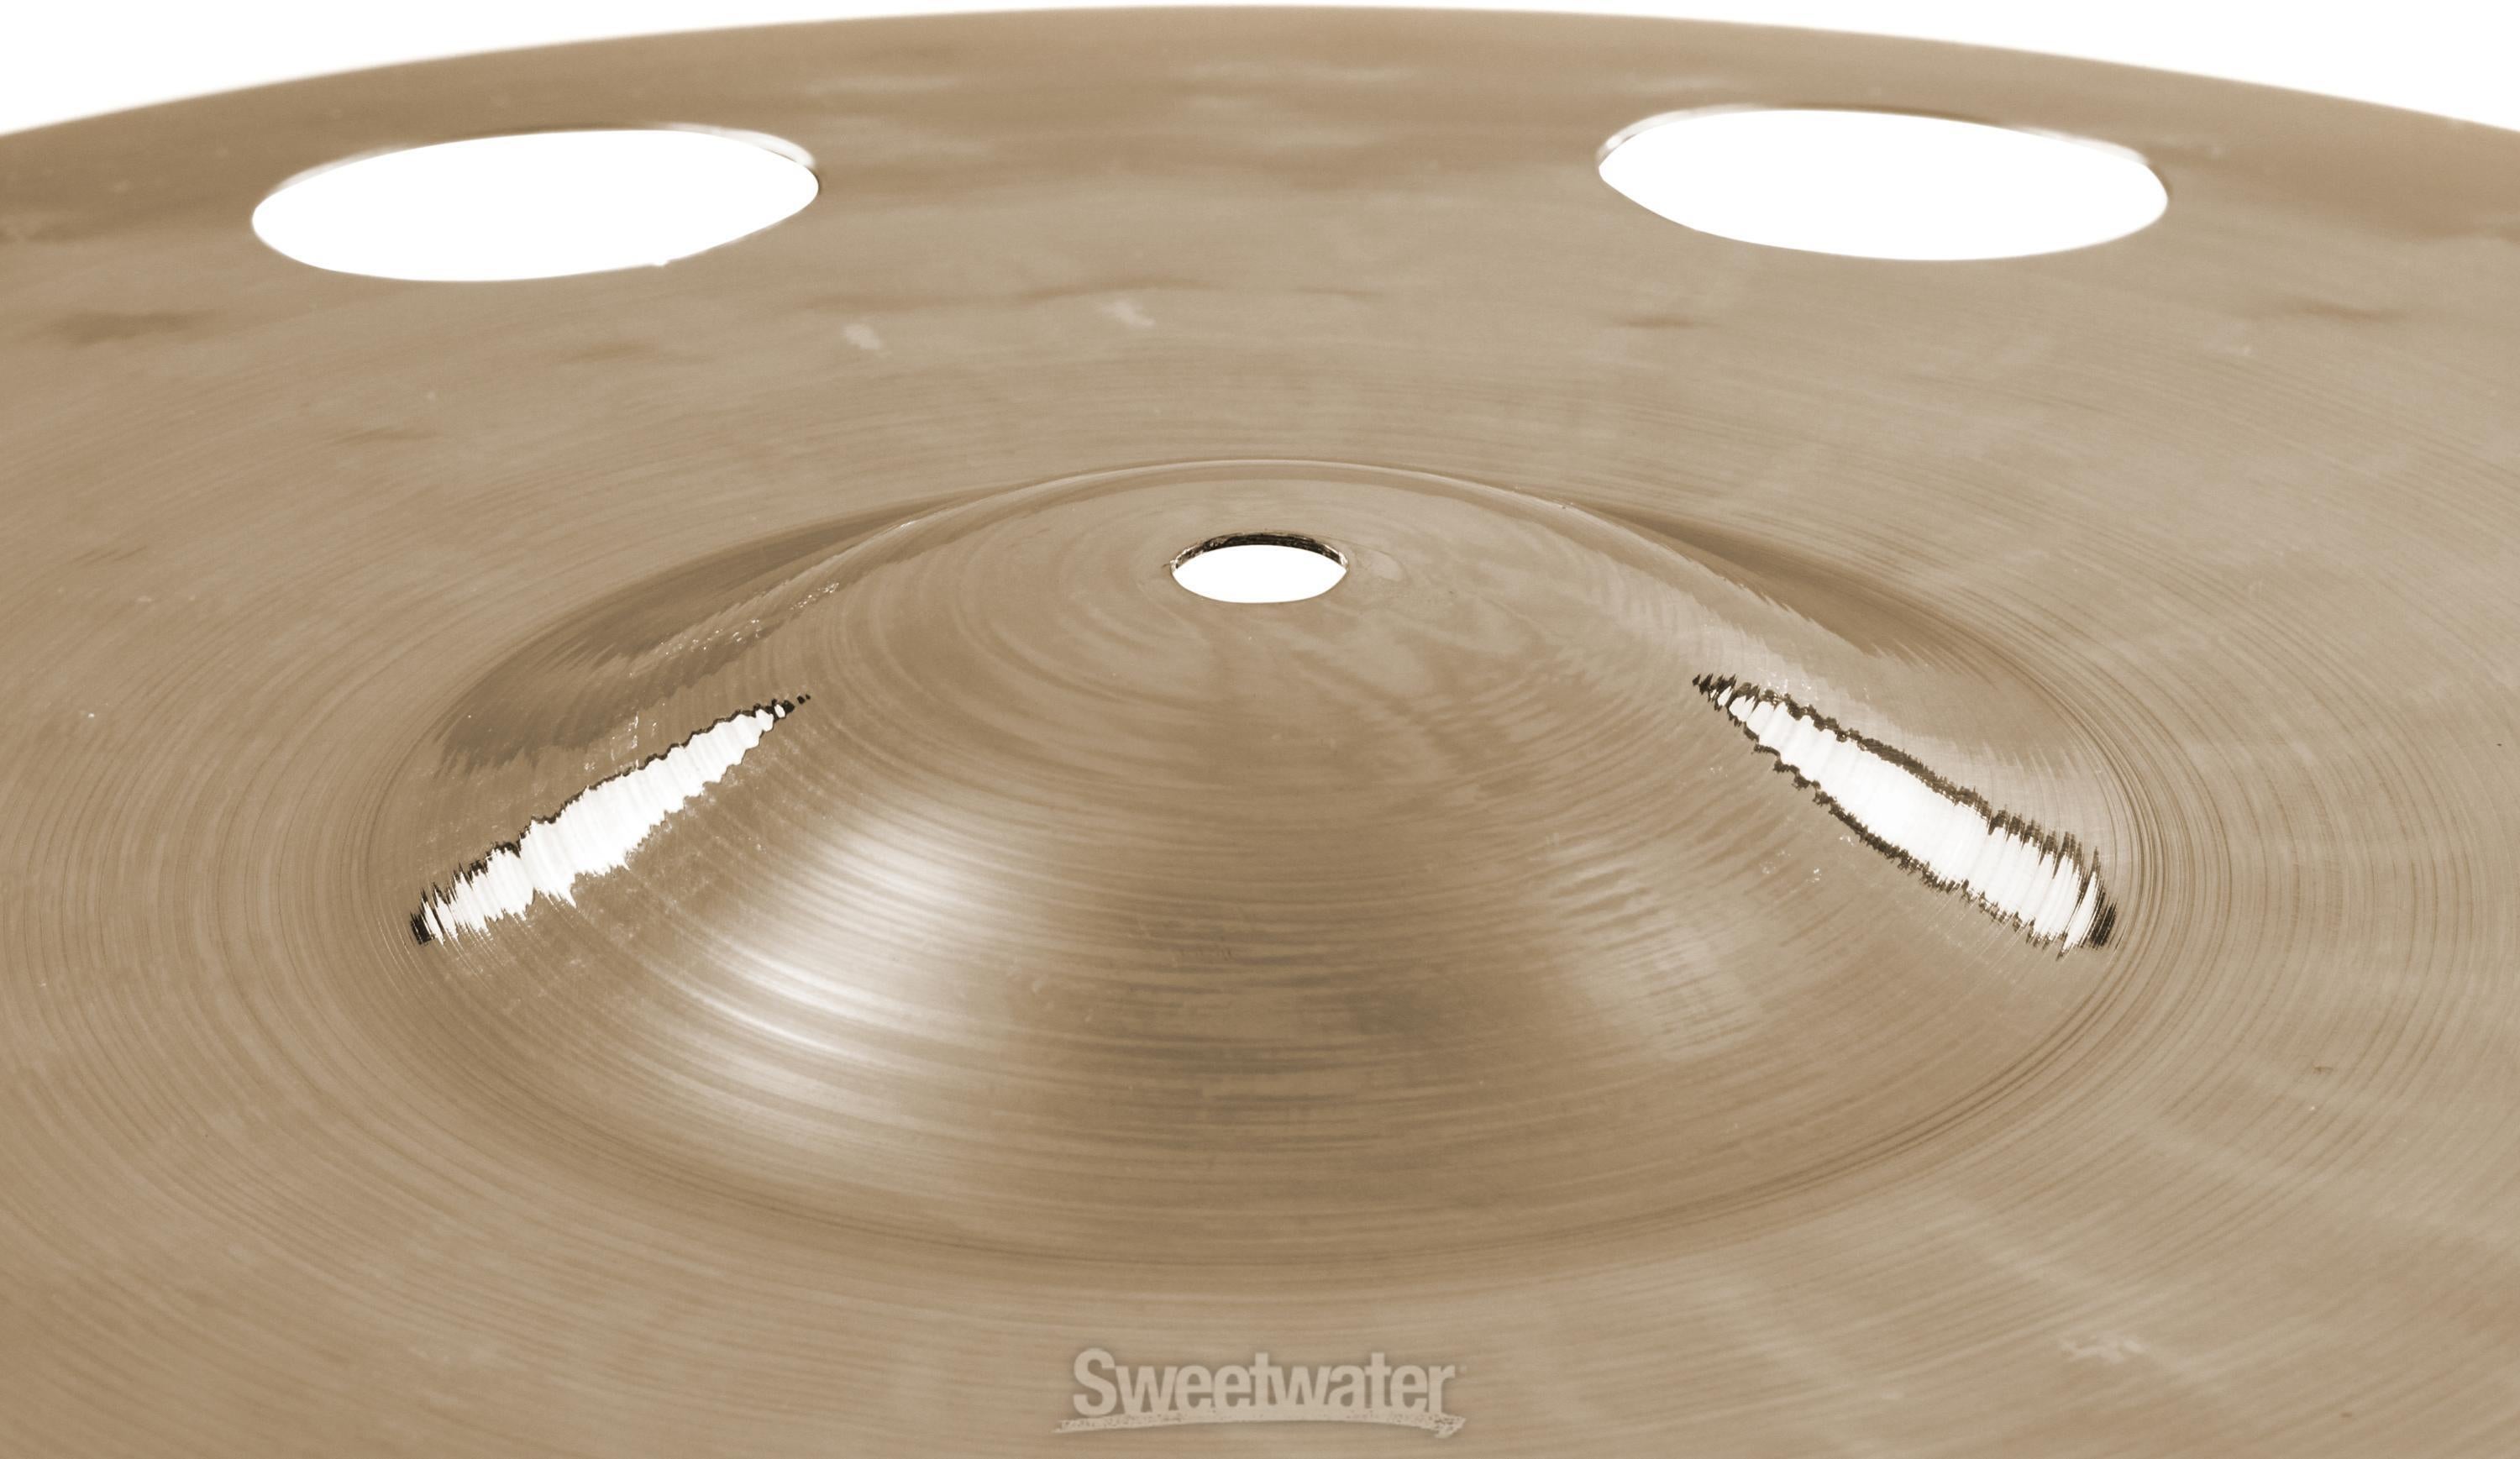 Sabian 18 inch HHX O-Zone Crash Cymbal - Brilliant Finish | Sweetwater